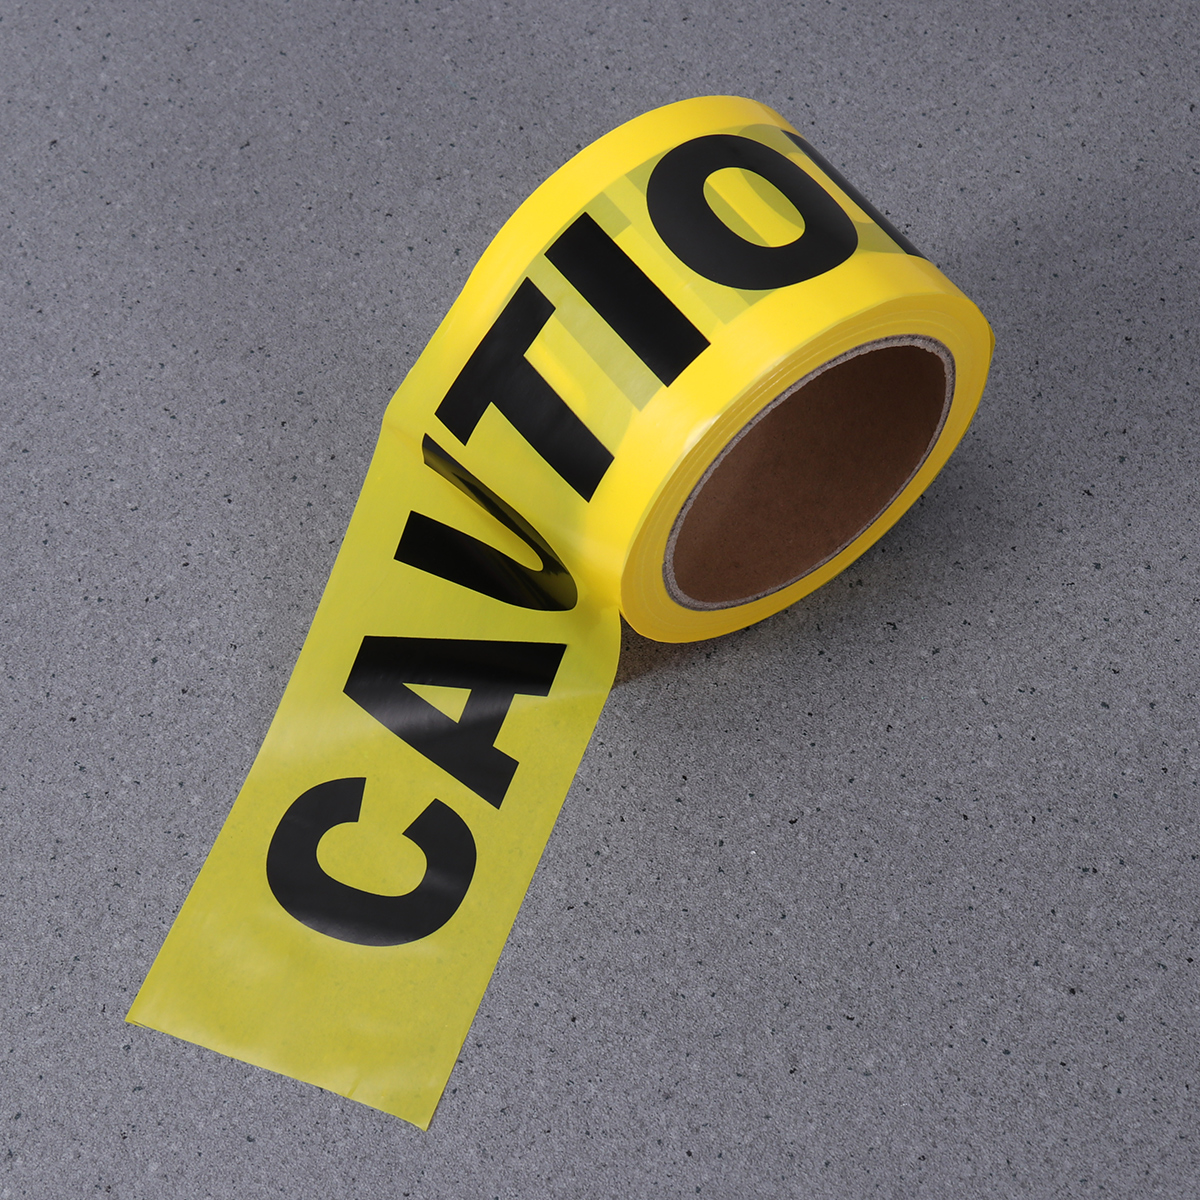 Hazard Tape Warning Halloween Safety Stripe Duct Caution Adhesive - image 5 of 6